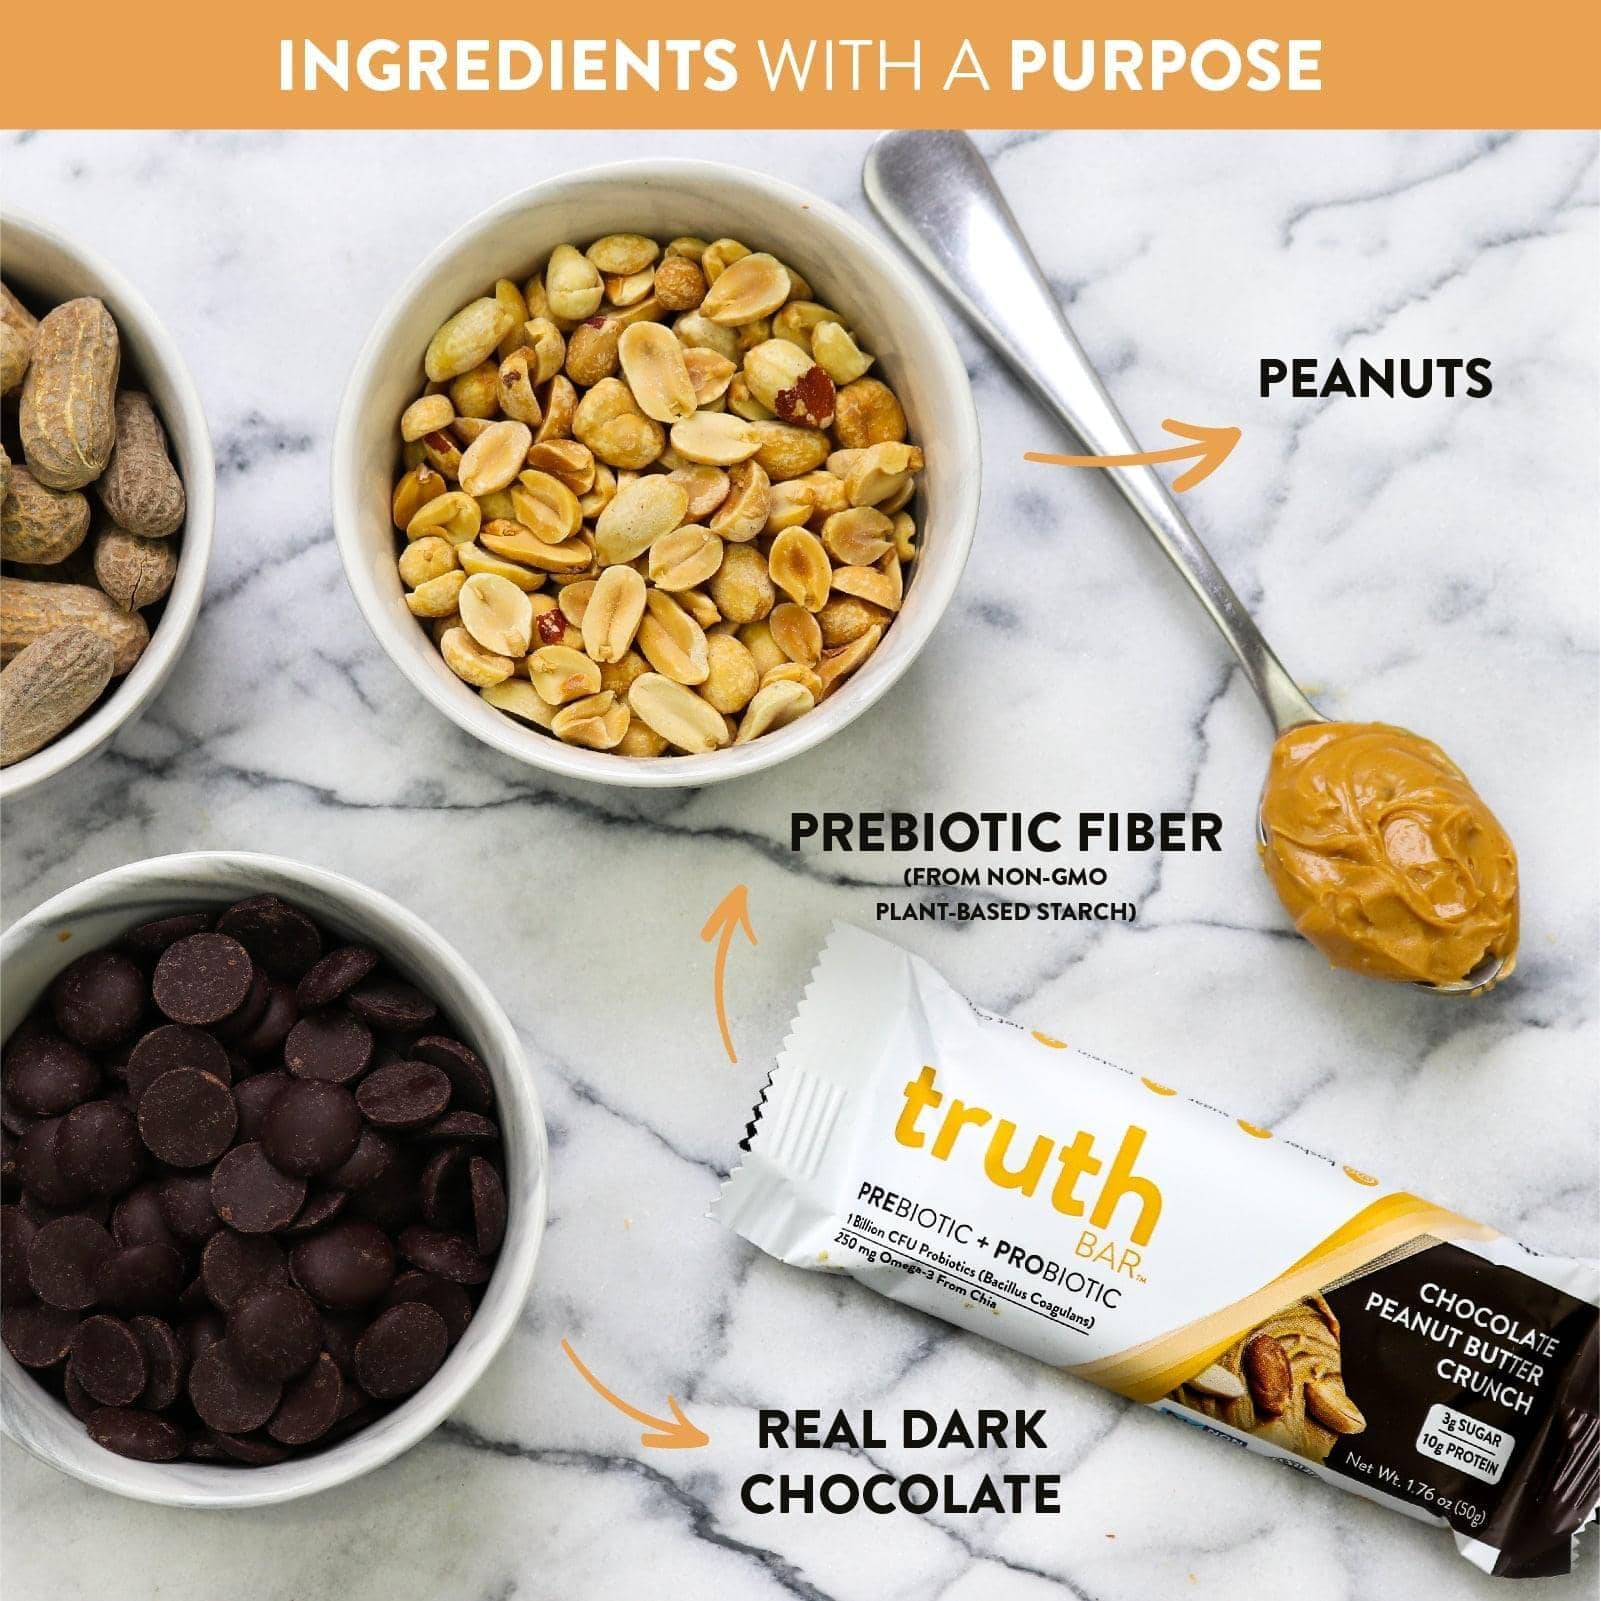 Truth Bar Dark Chocolate Peanut Butter Crunch Prebiotic & Probiotic Plant Based Snack Bar | Gut Health & Digestion | Healthy, Protein, Chia Omega-3